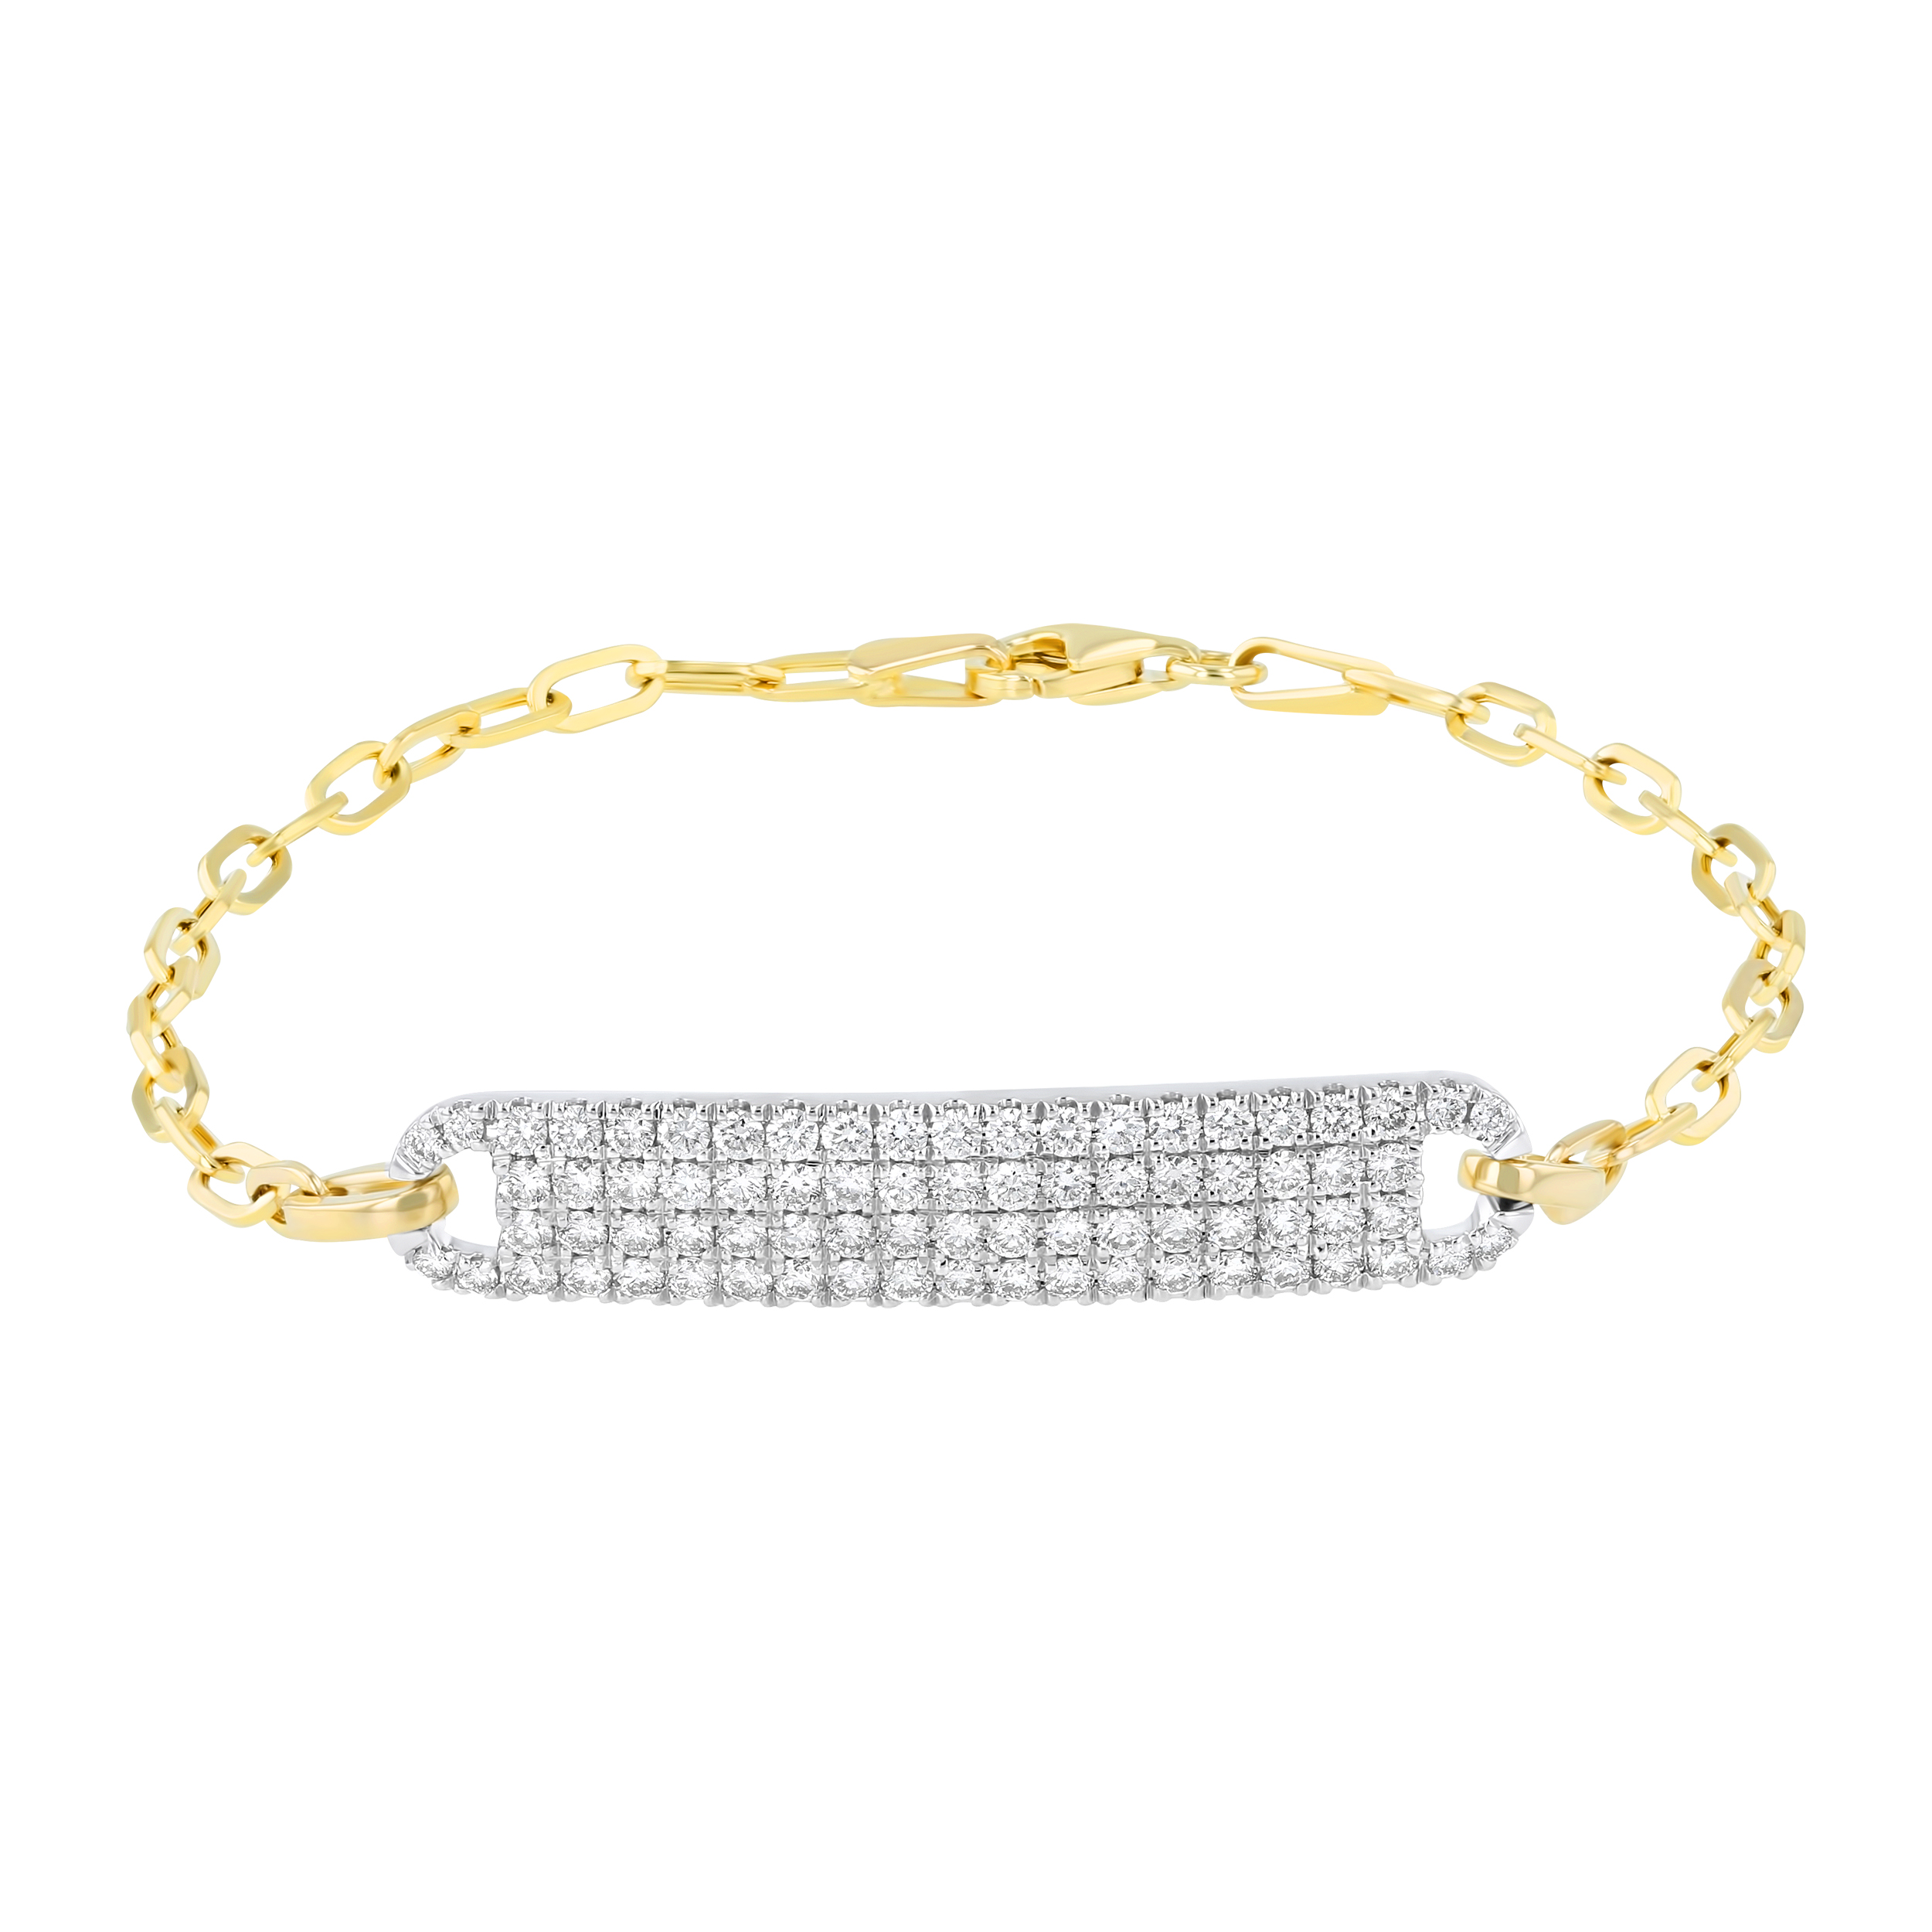 Two-tone1ctw Diamond Pave Bar Chain Bracelet l 7 1/2 inches